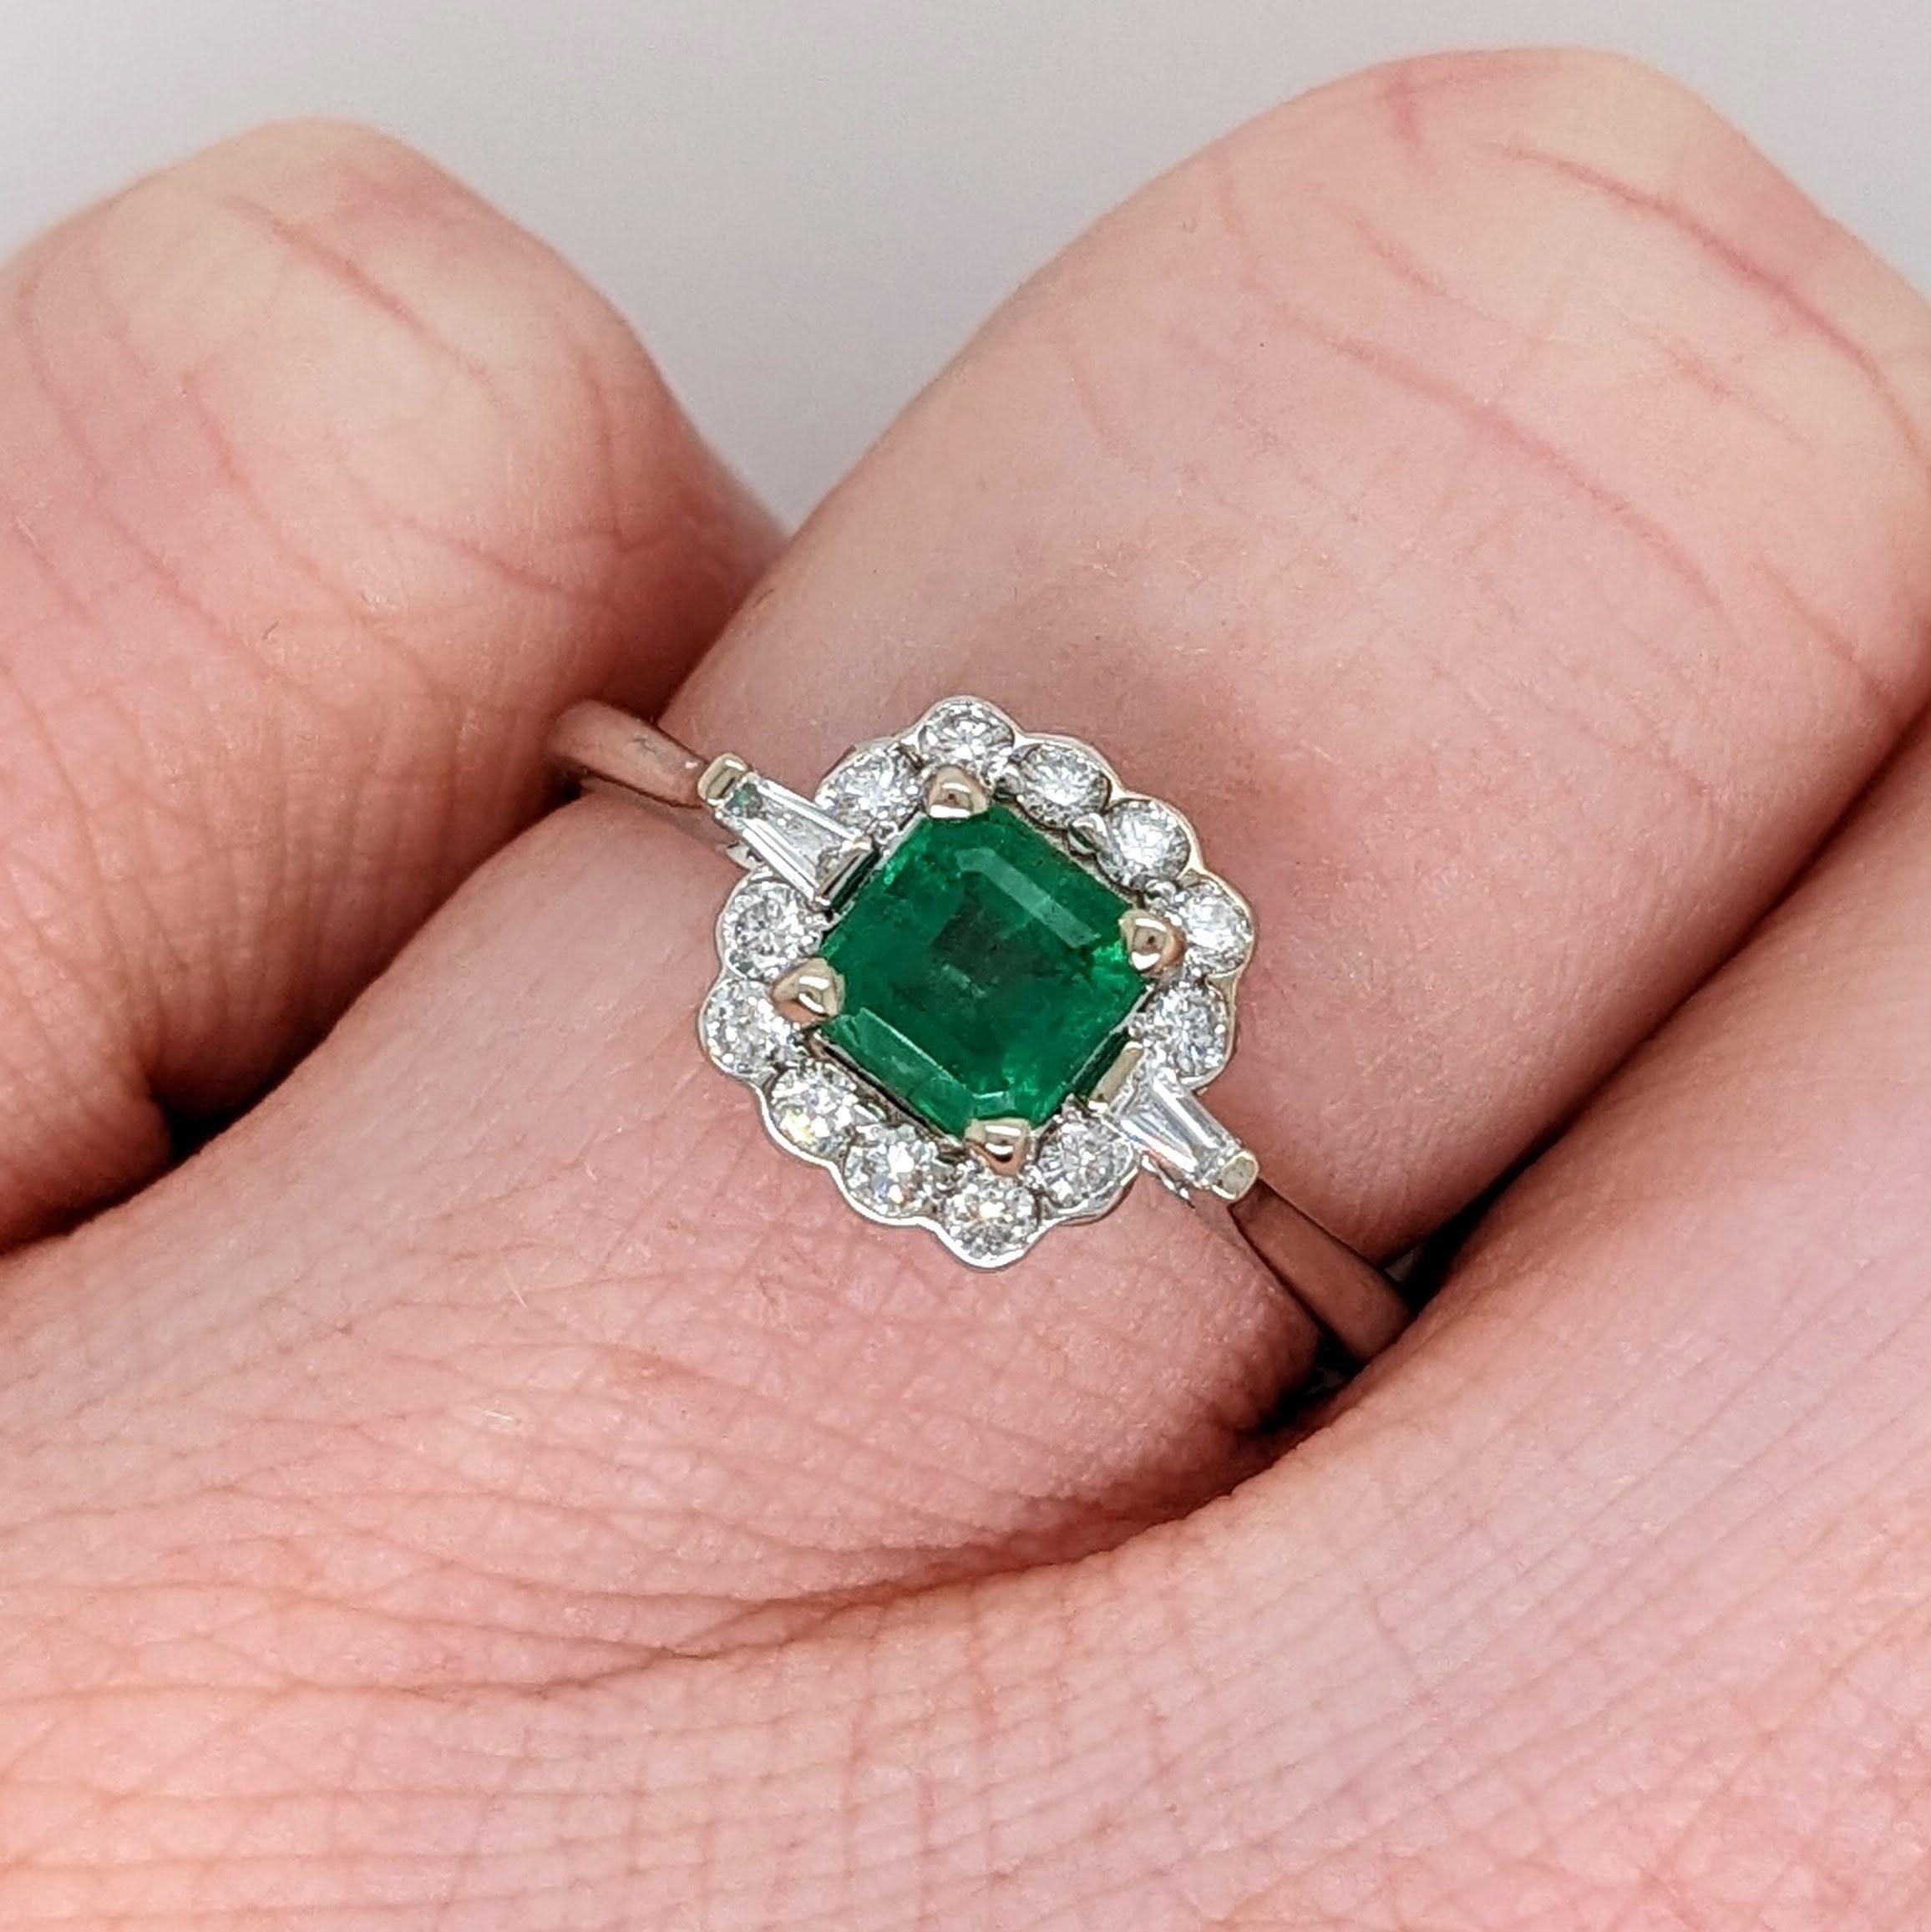 Zambian Emerald w Earth Mined Diamonds in Solid 14K White Gold EM 5mm For Sale 1